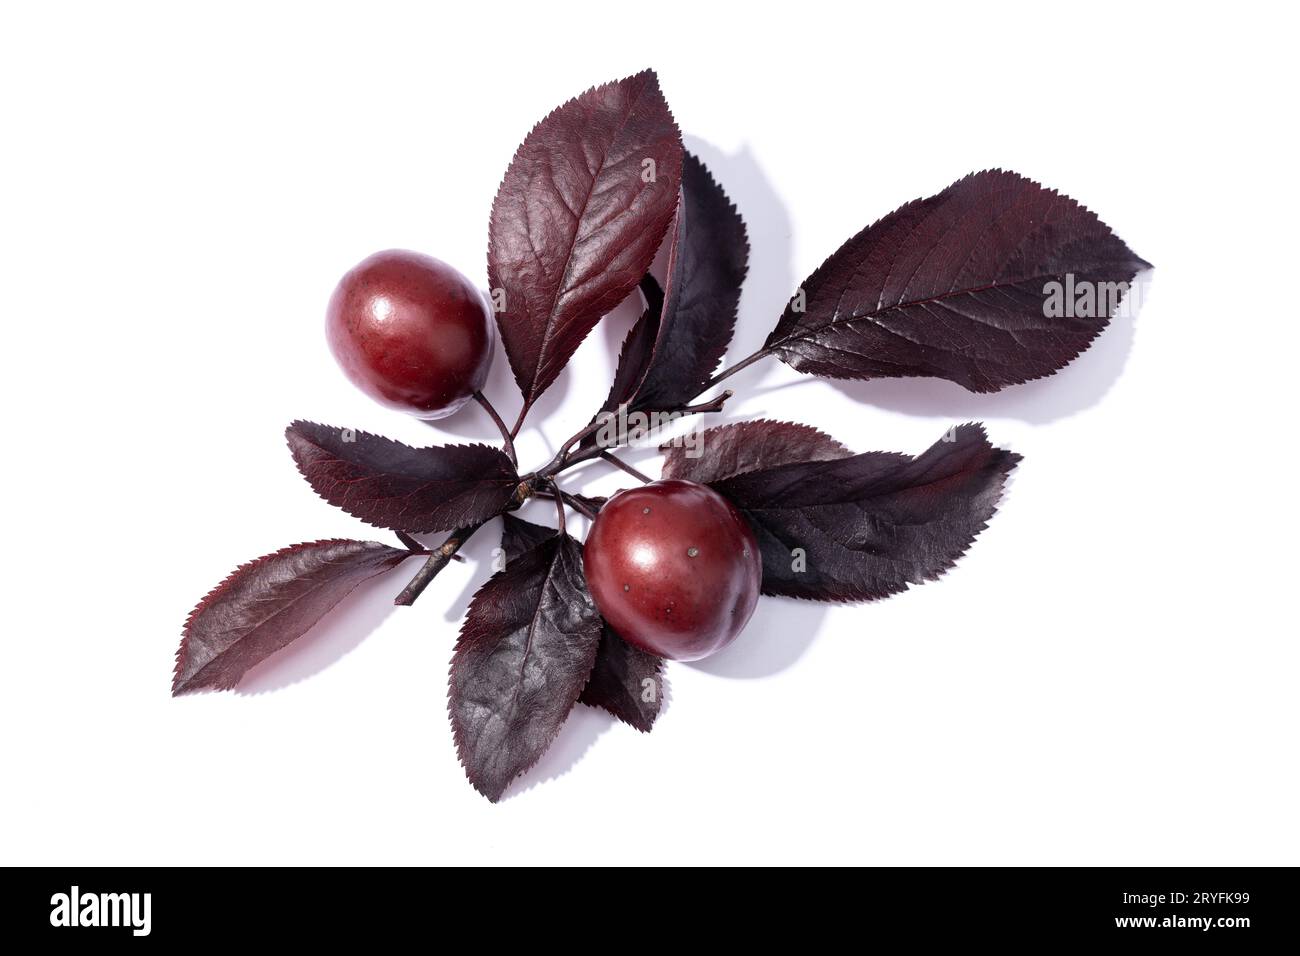 Cherry plum or myrobalan plum twig with fruit and leaves isolated on white background. Prunus cerasifera Stock Photo